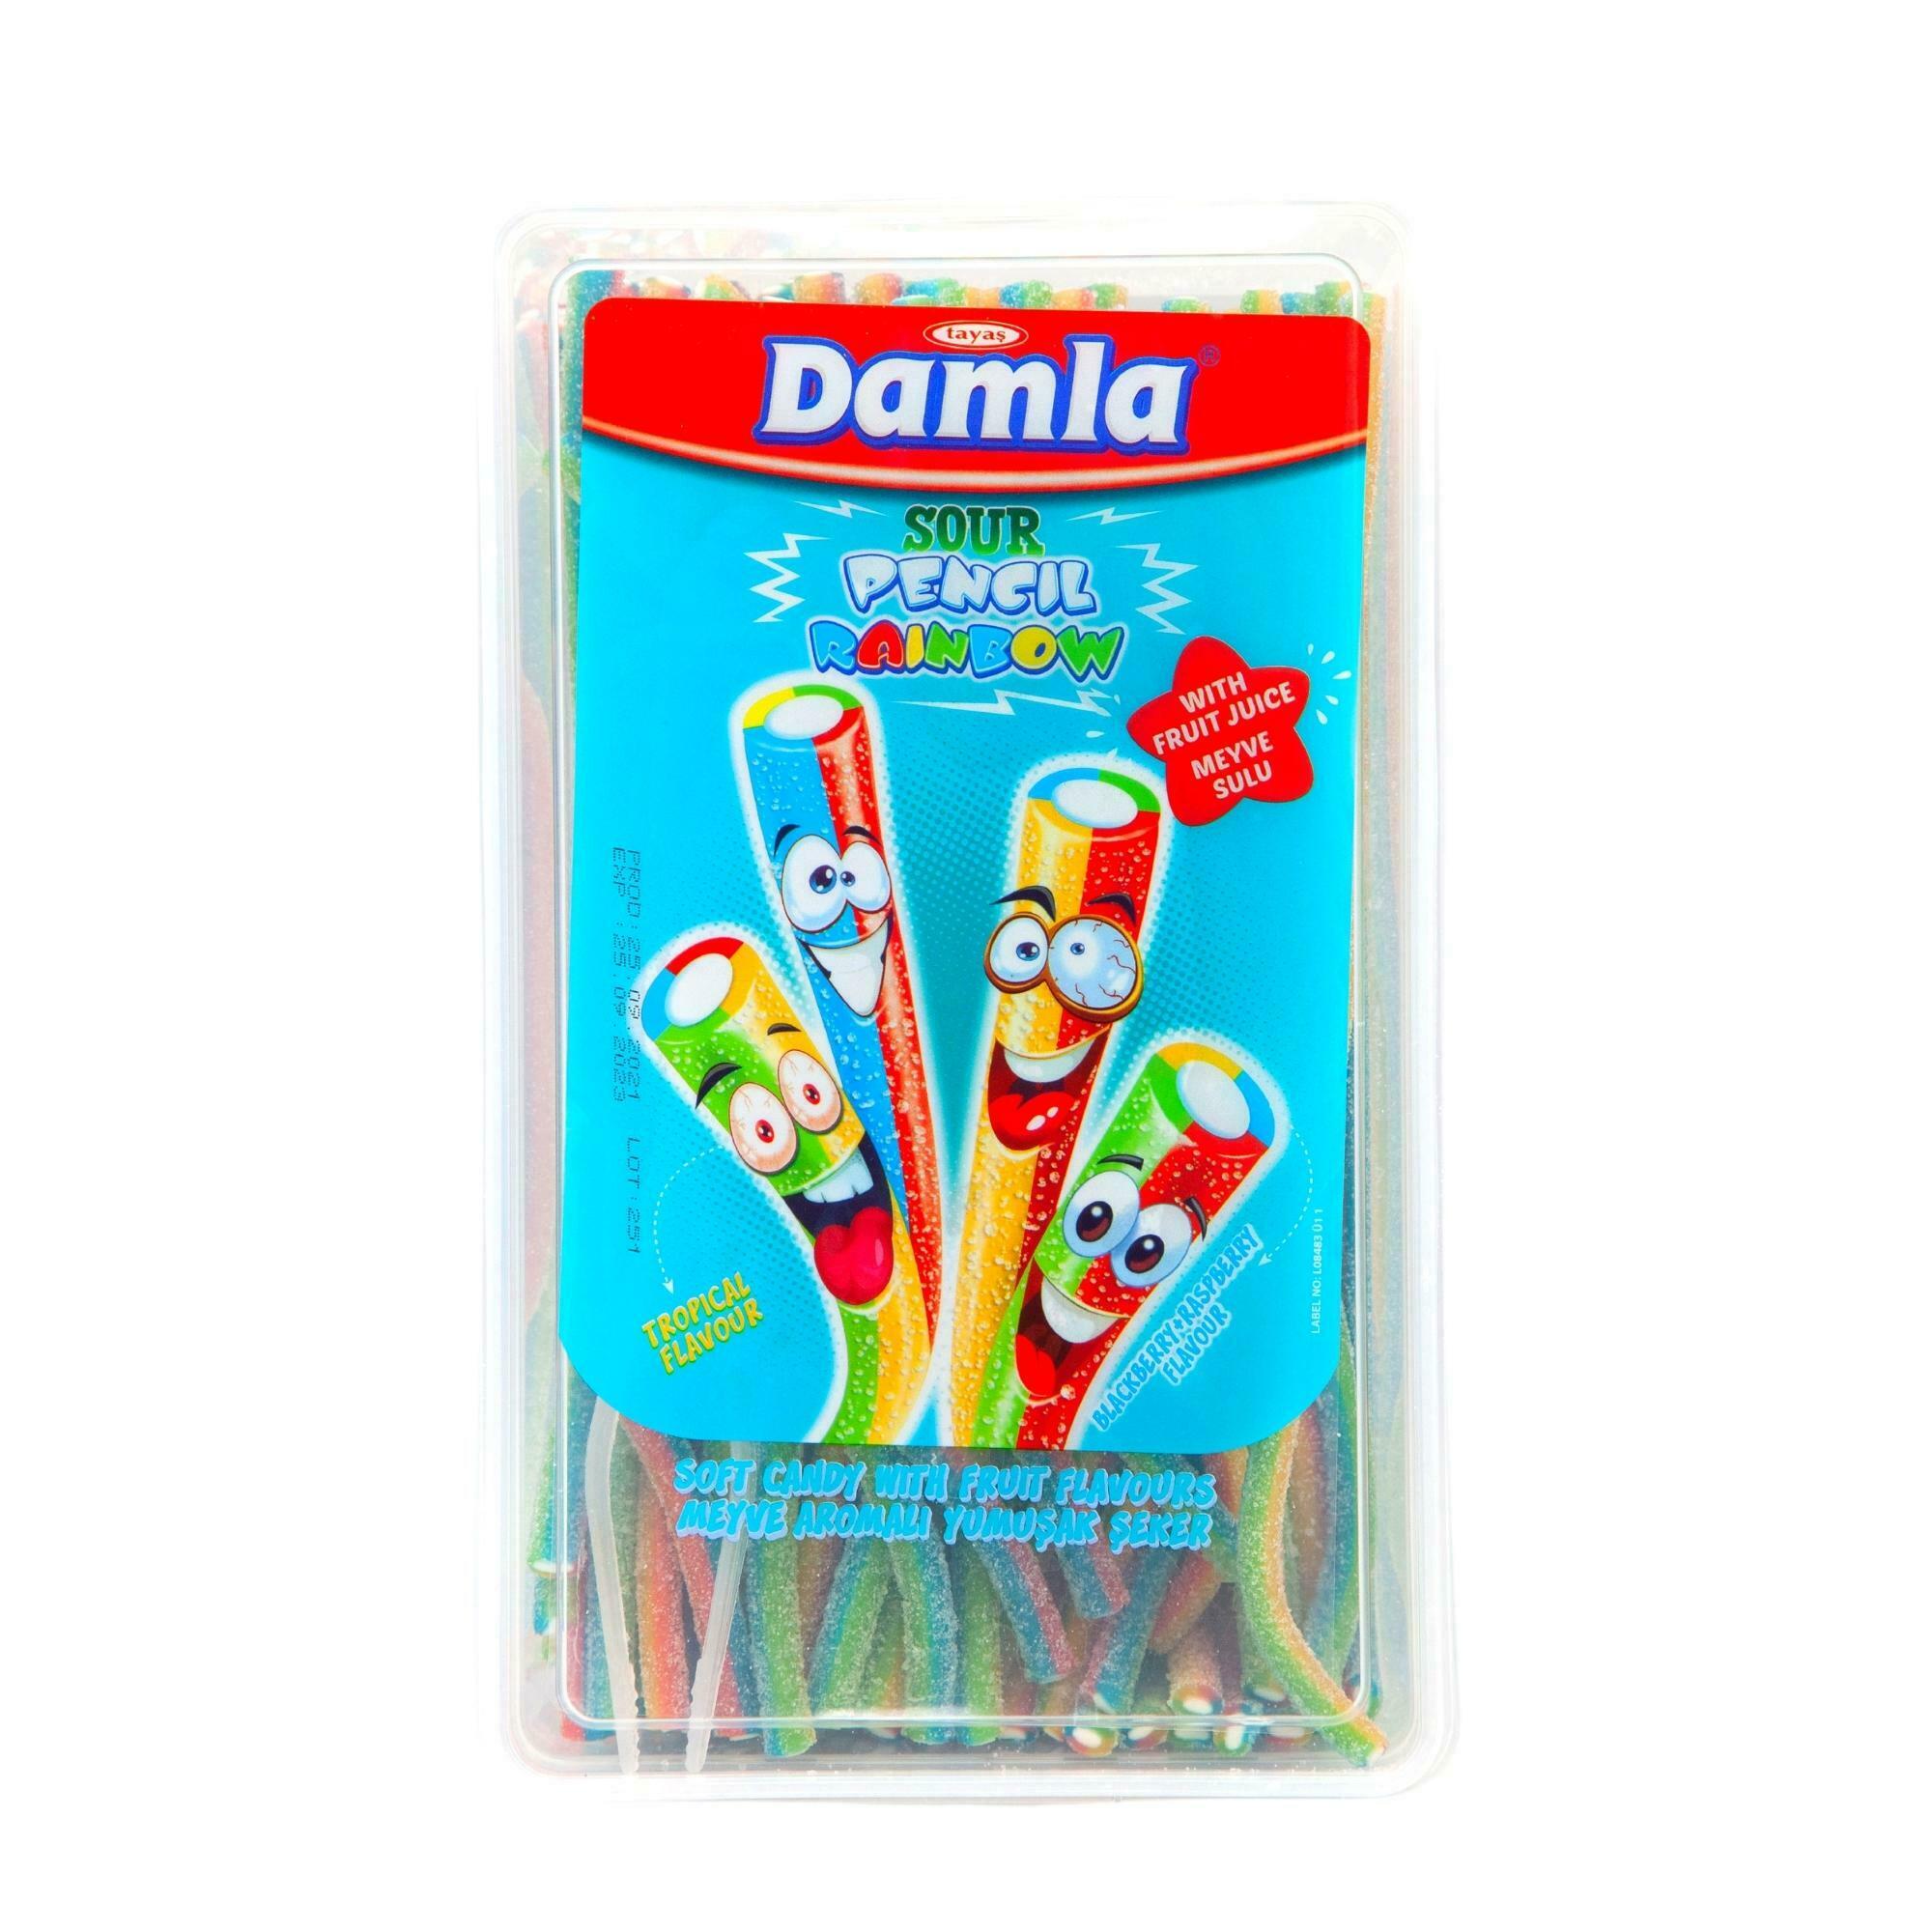 Damla Sour Licorice Pencil Rainbow (1KG) - Aytac Foods